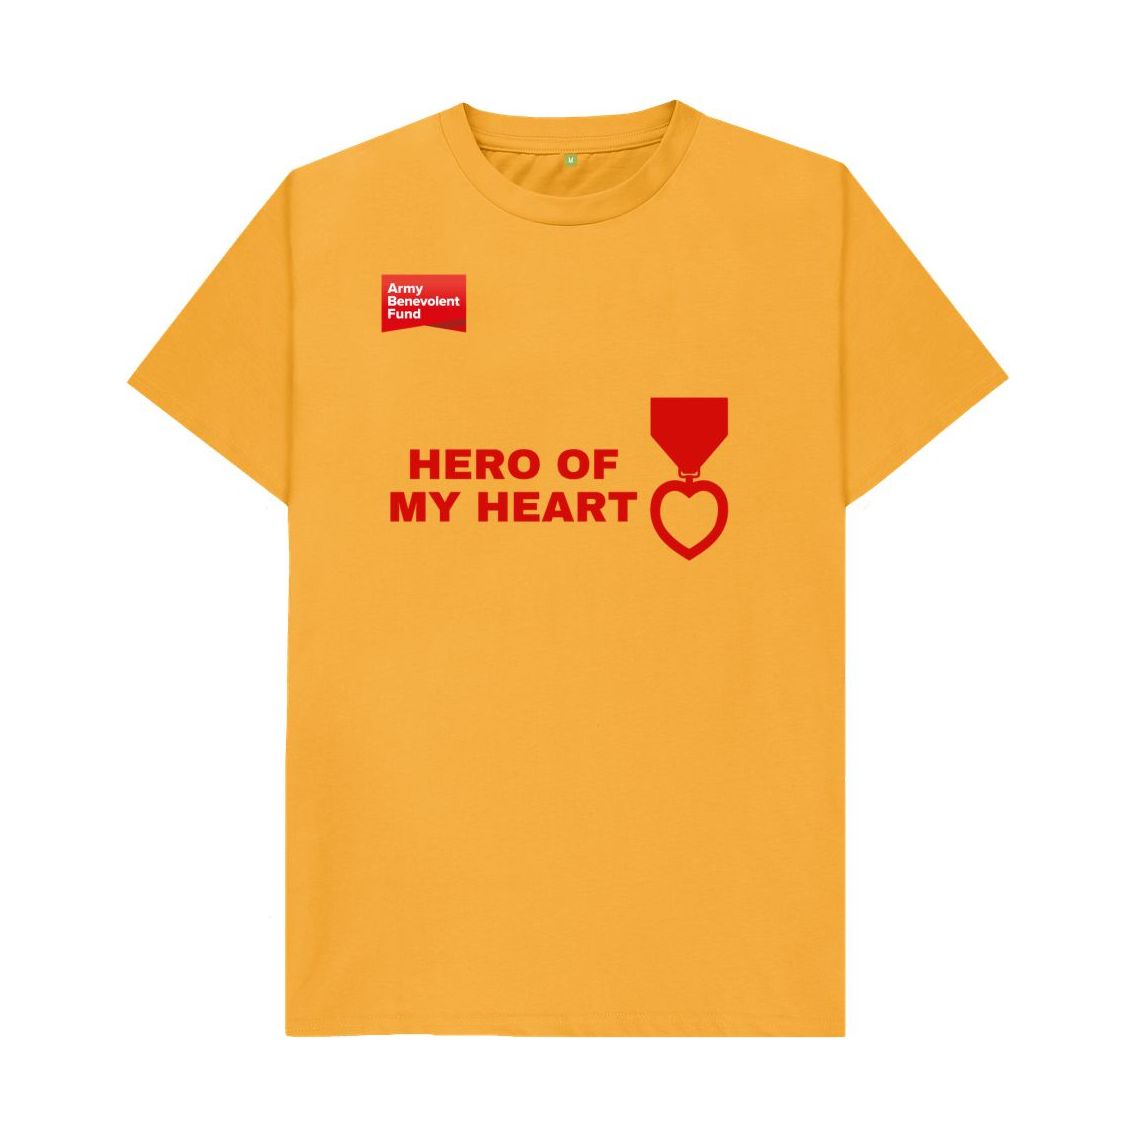 Hero of my heart unisex T-shirt - Army Benevolent Fund